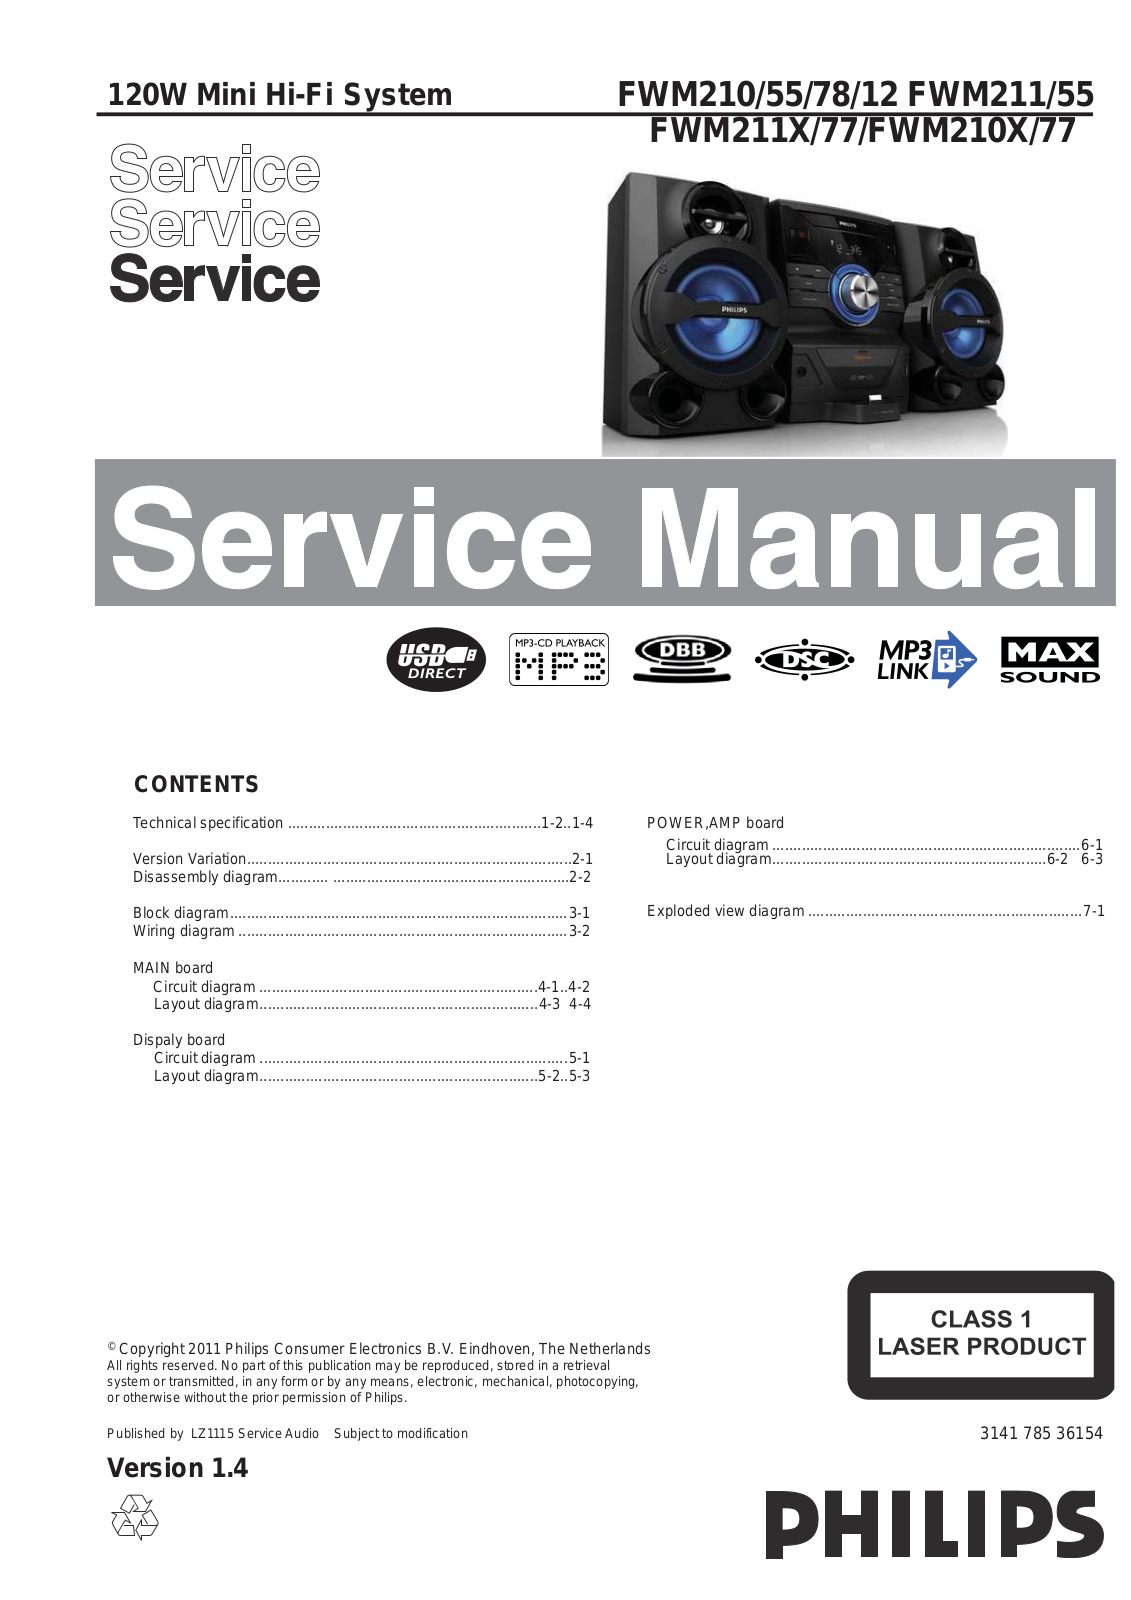 Philips FWM-211-X, FWM-211, FWM-210-X Service Manual